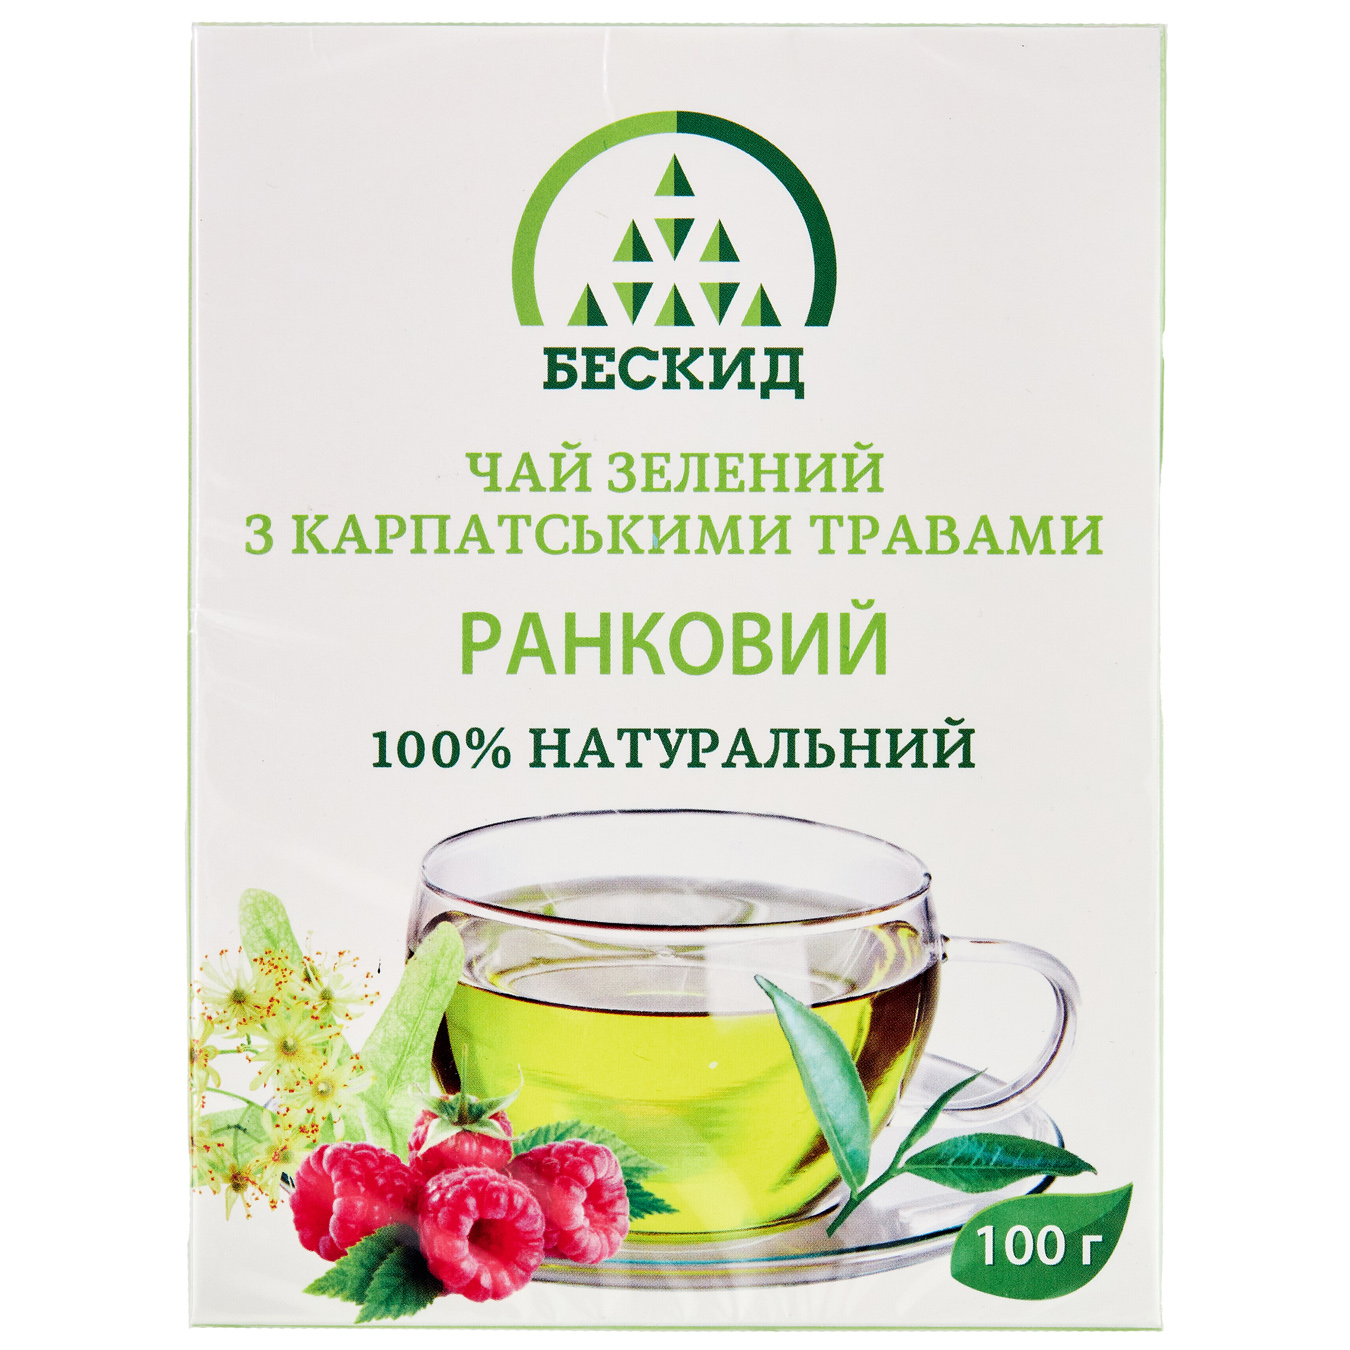 Beskyd Morning Green Tea with Carpathian Herbs 100g